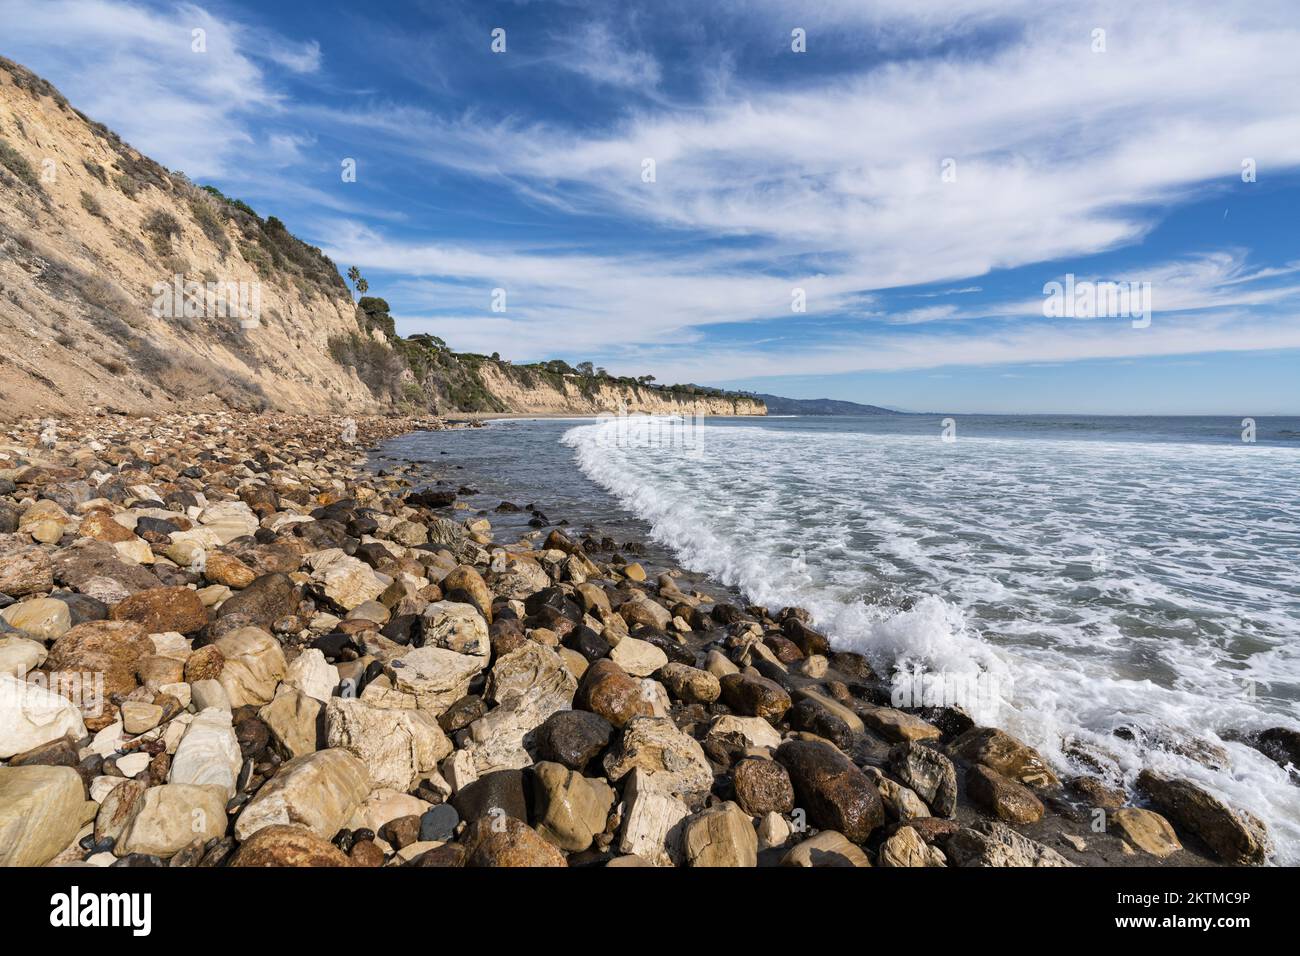 Remote Dume Cove beach in Malibu, California. Stock Photo